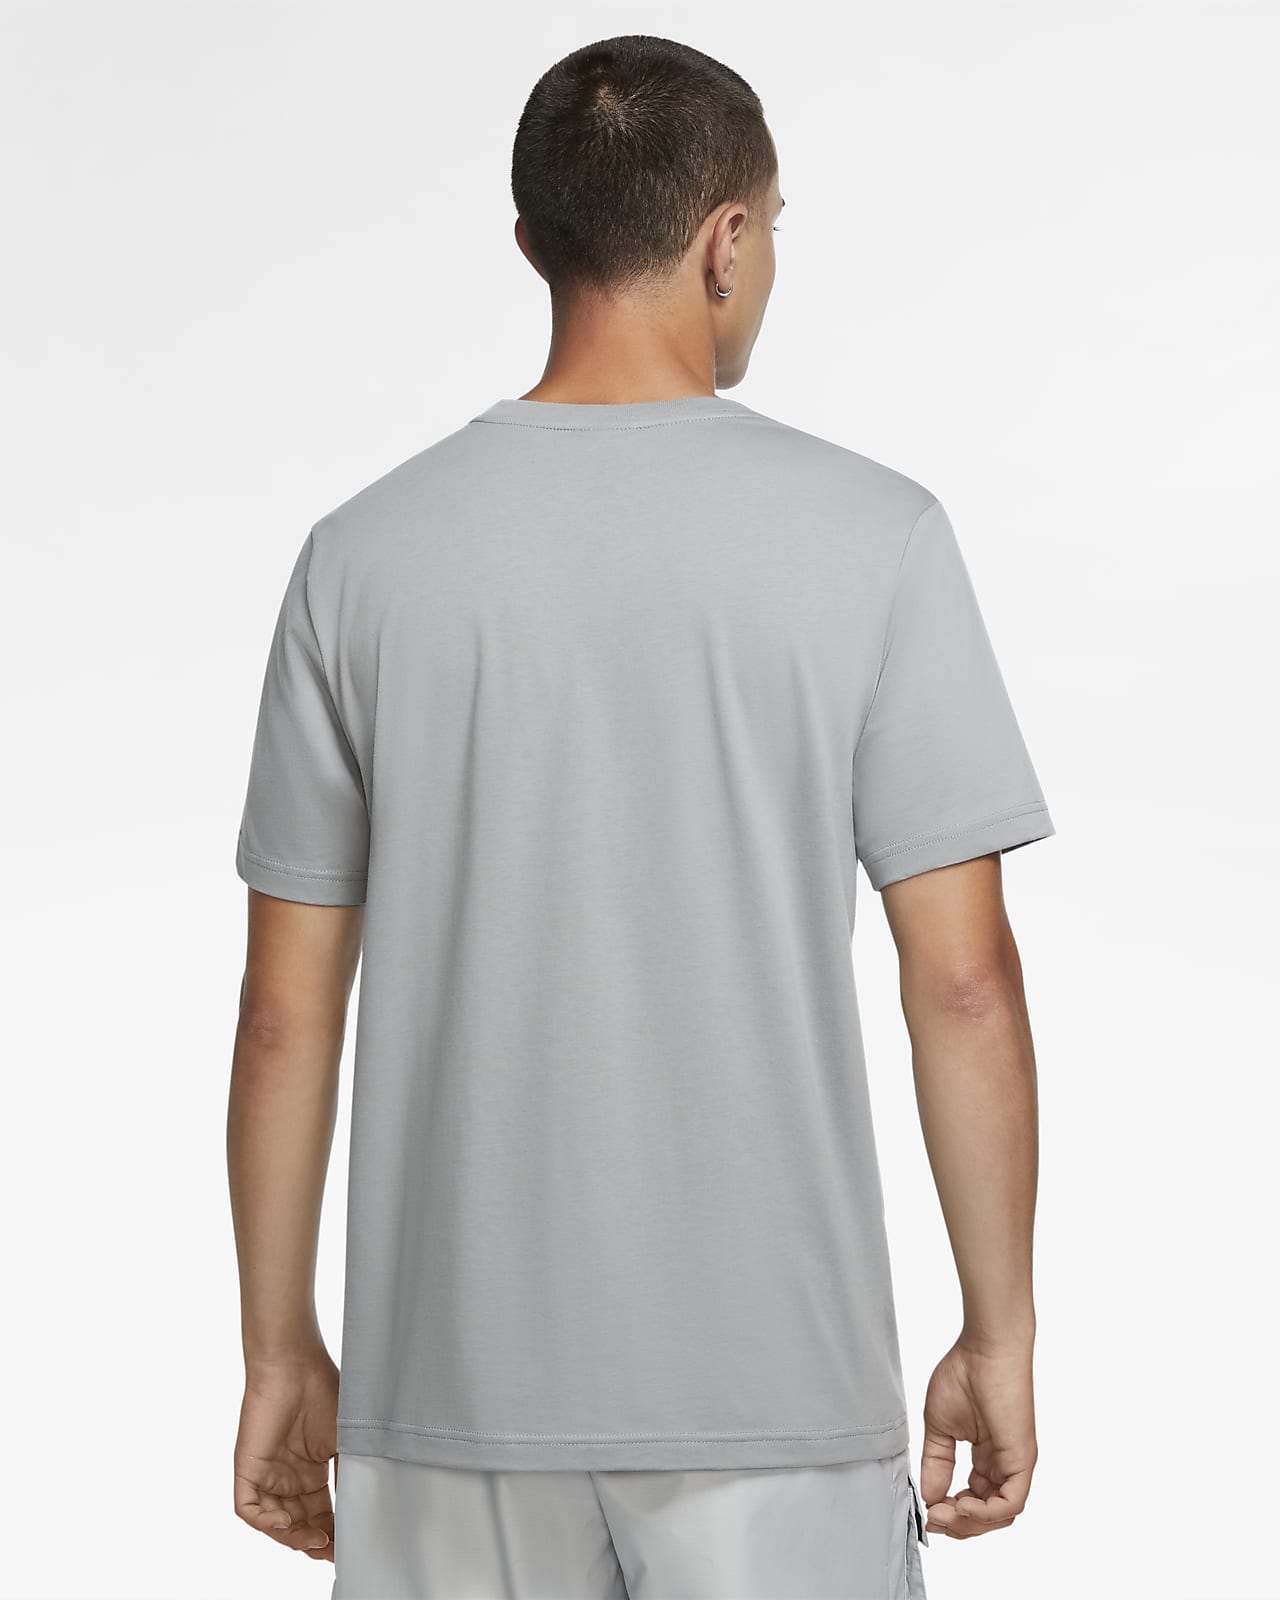 Inactivo Estrictamente Pendiente Nike Sportswear Men's Air Max T-Shirt. Nike.com